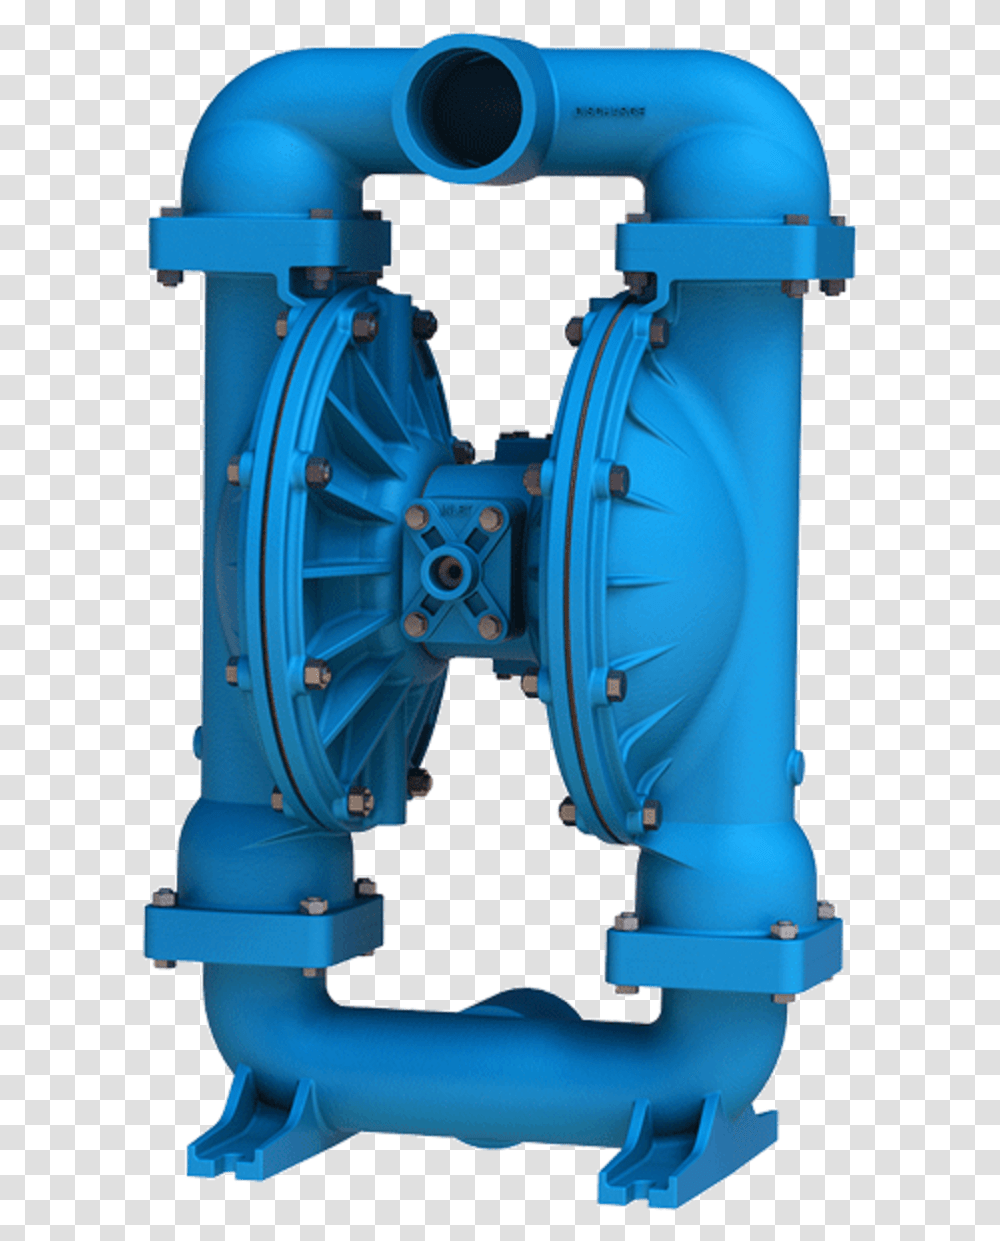 Sandpiper S30m Pumps Electric Diaphragm Pump, Machine, Motor Transparent Png